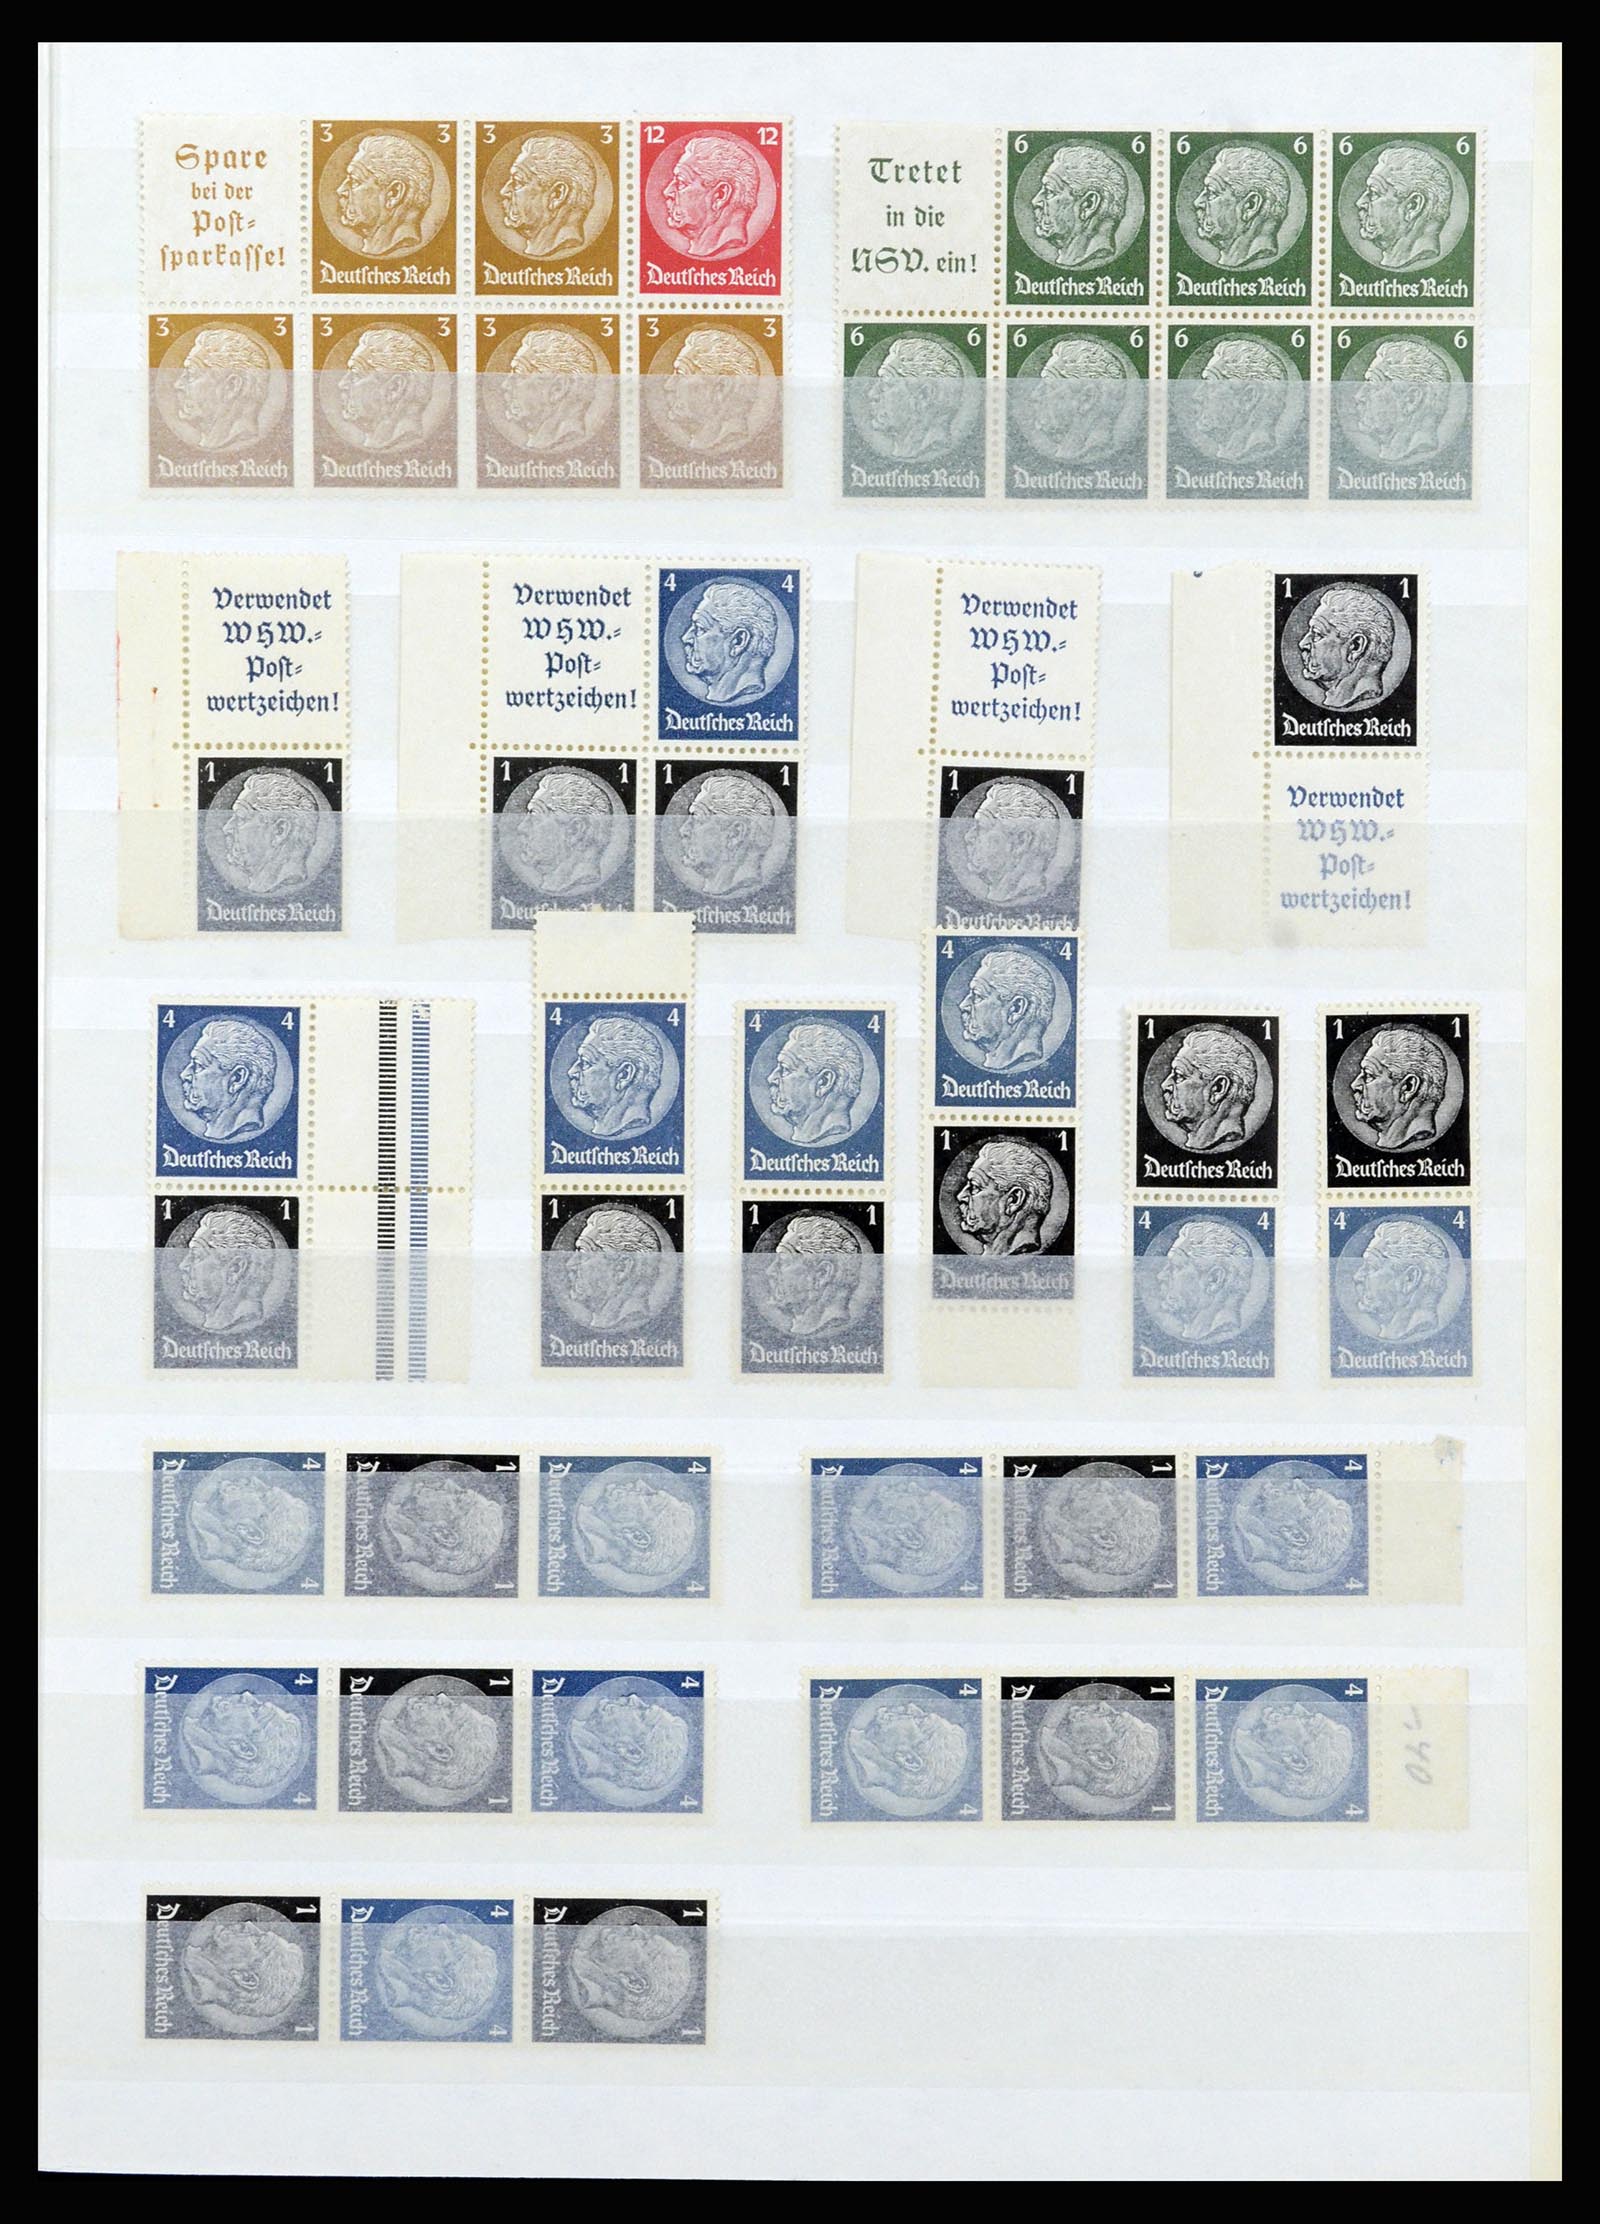 37103 152 - Stamp collection 37103 German Reich 1880-1945.